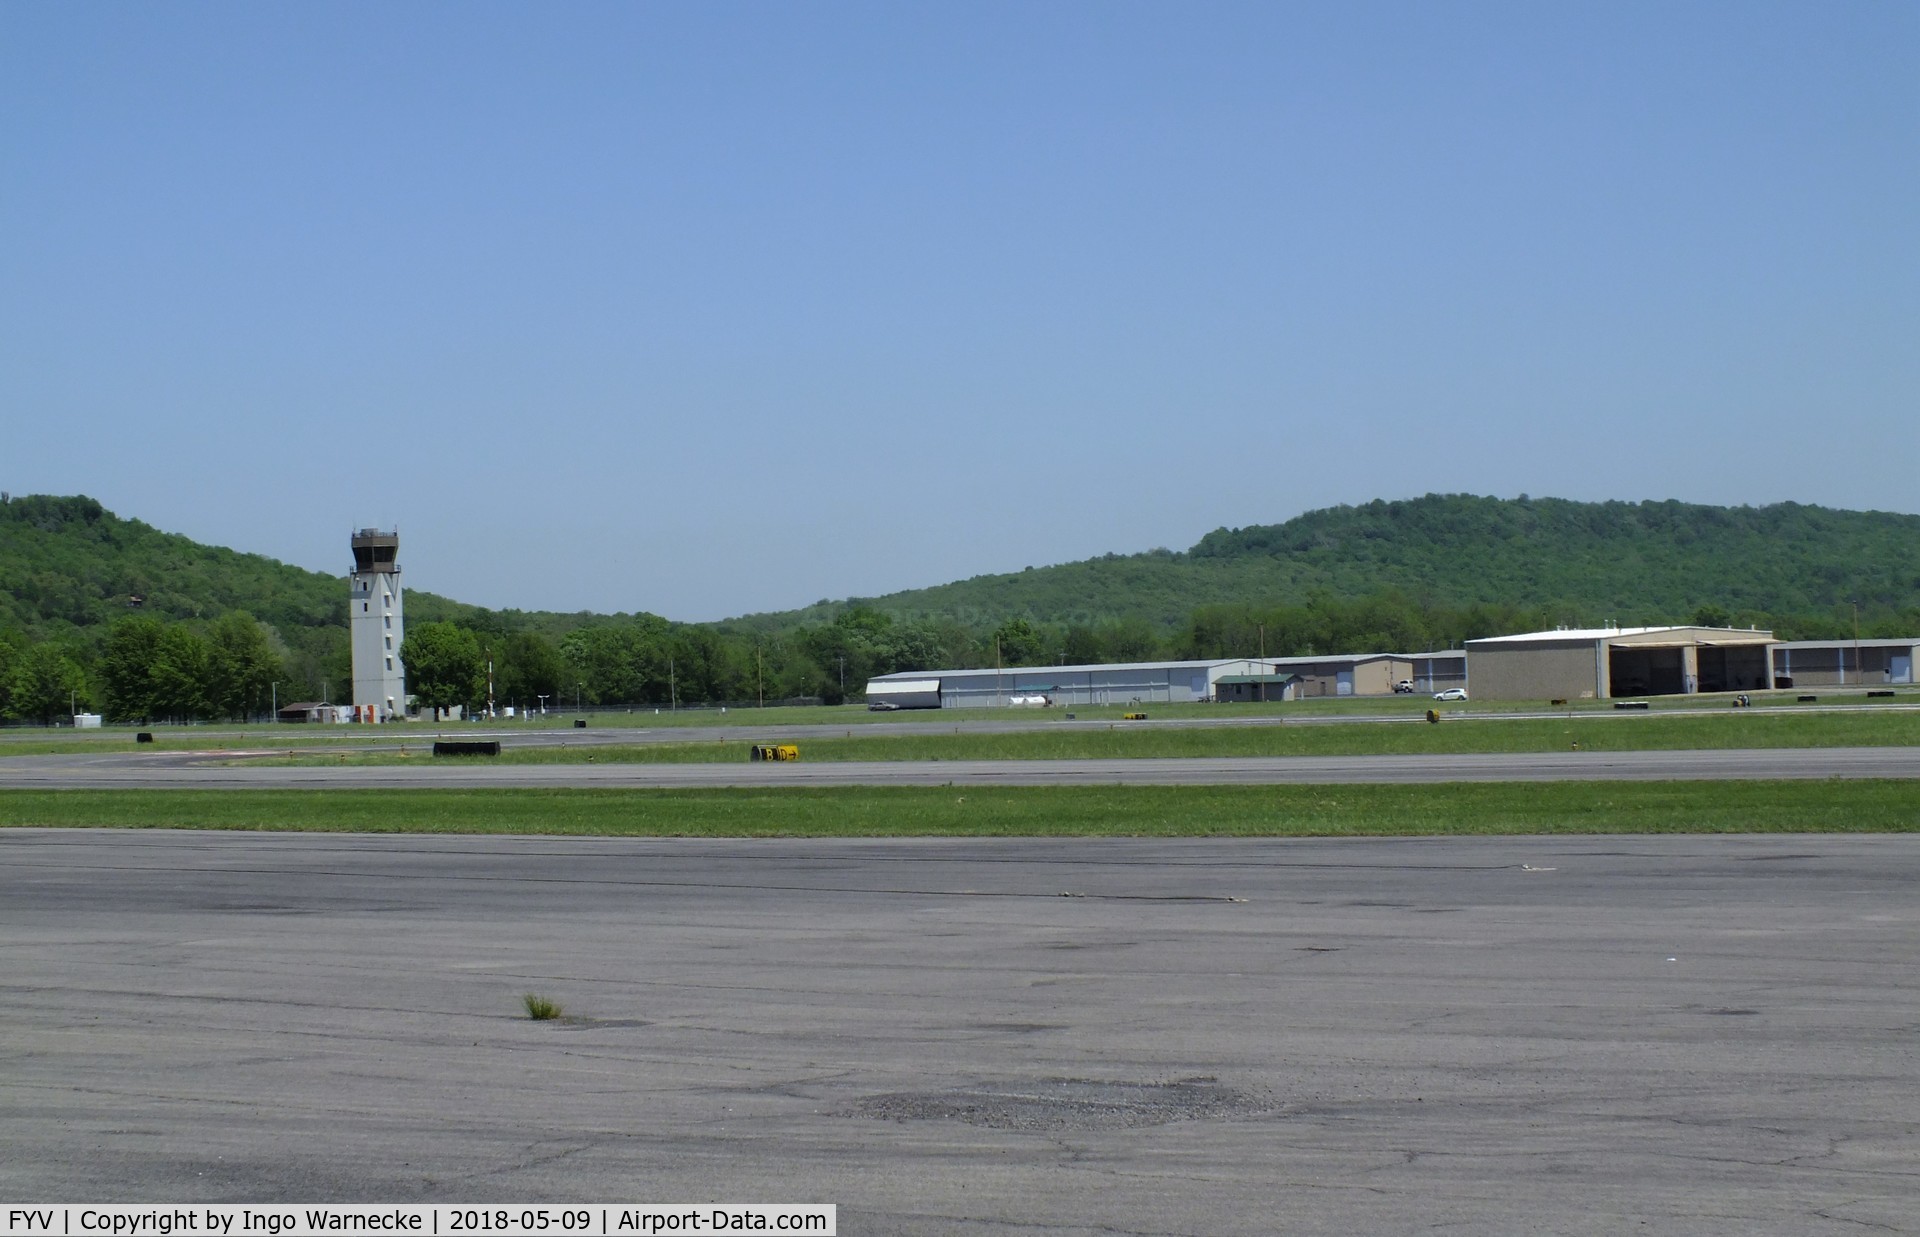 Drake Field Airport (FYV) - tower and hangars at Fayetteville Municpal Airport / Drake Field, Fayetteville AR